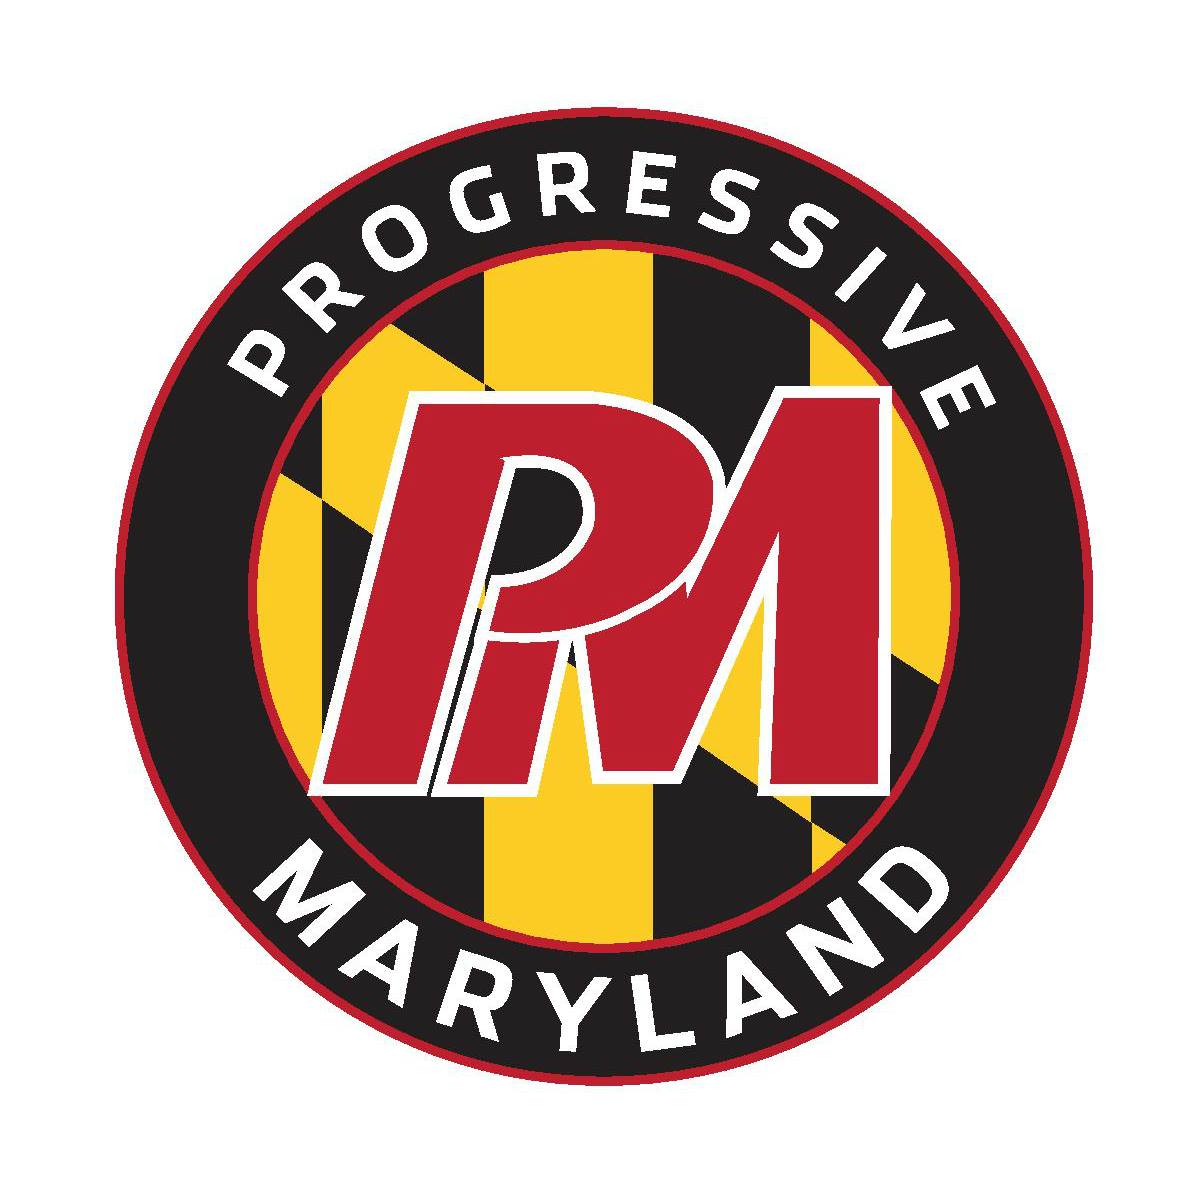 Progressive Maryland